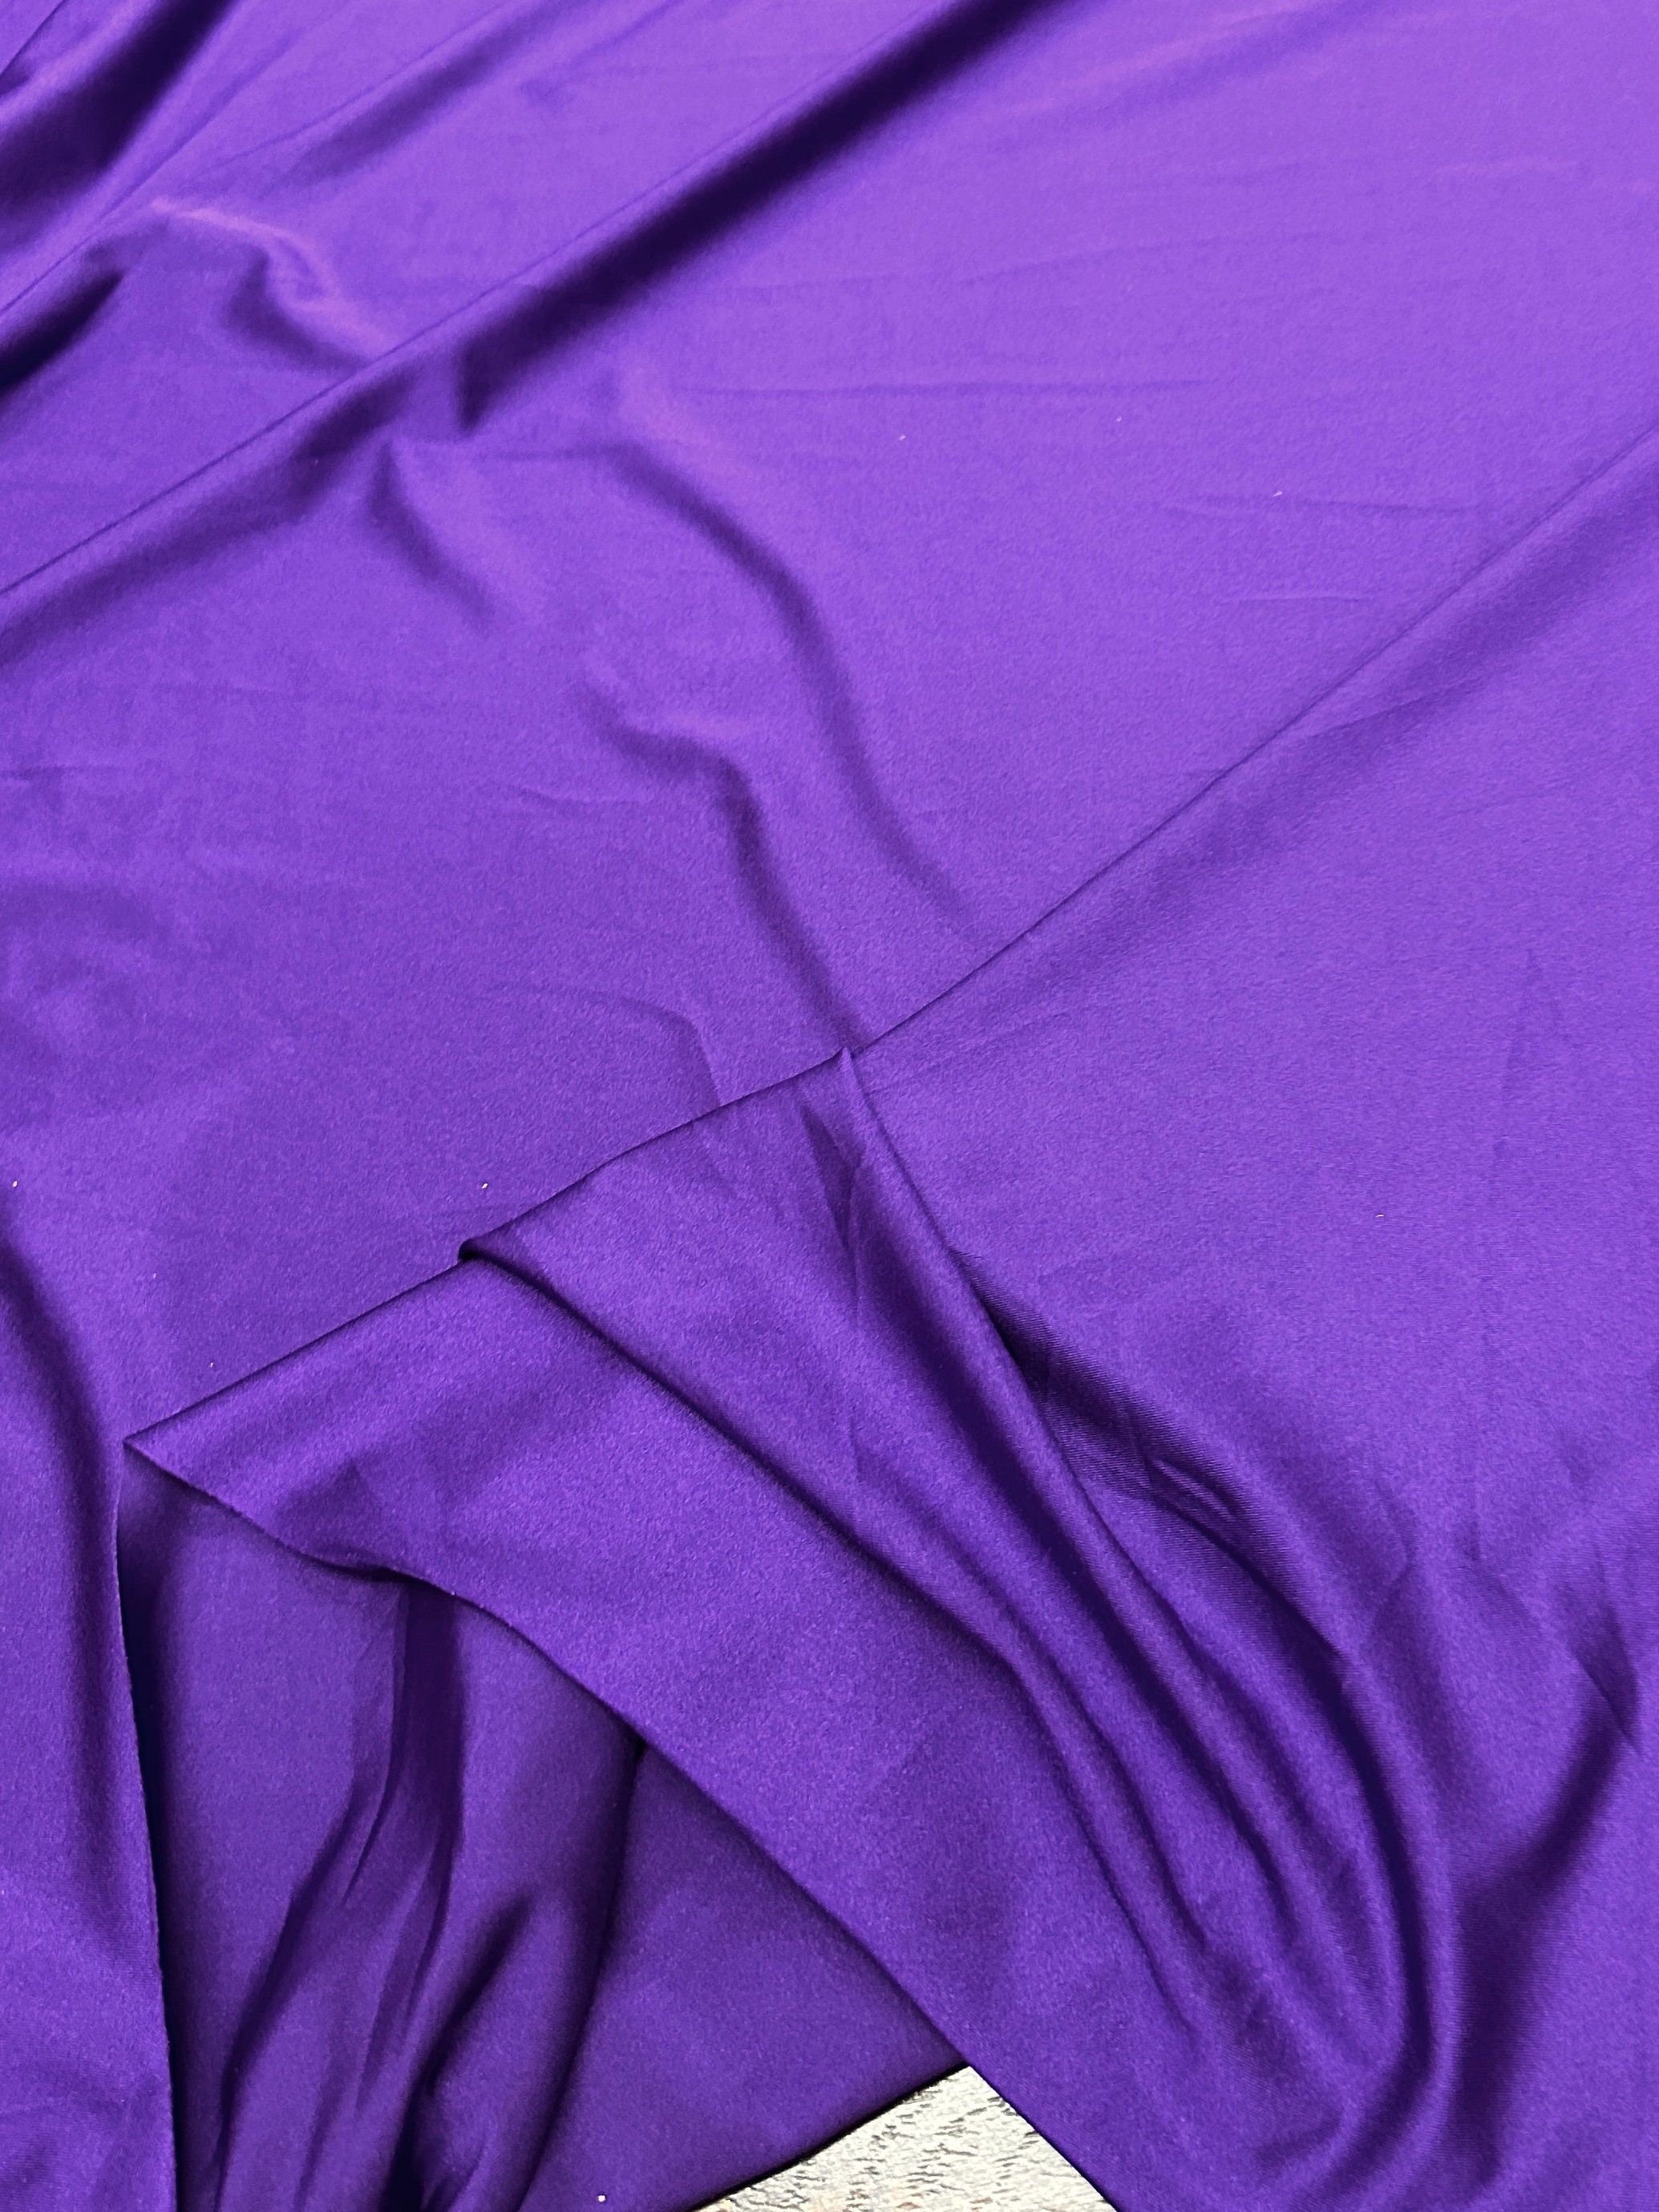 EXP core - Purple Printed Activewear Leggings Polyester Spandex Nylon Lycra  ® Spandex